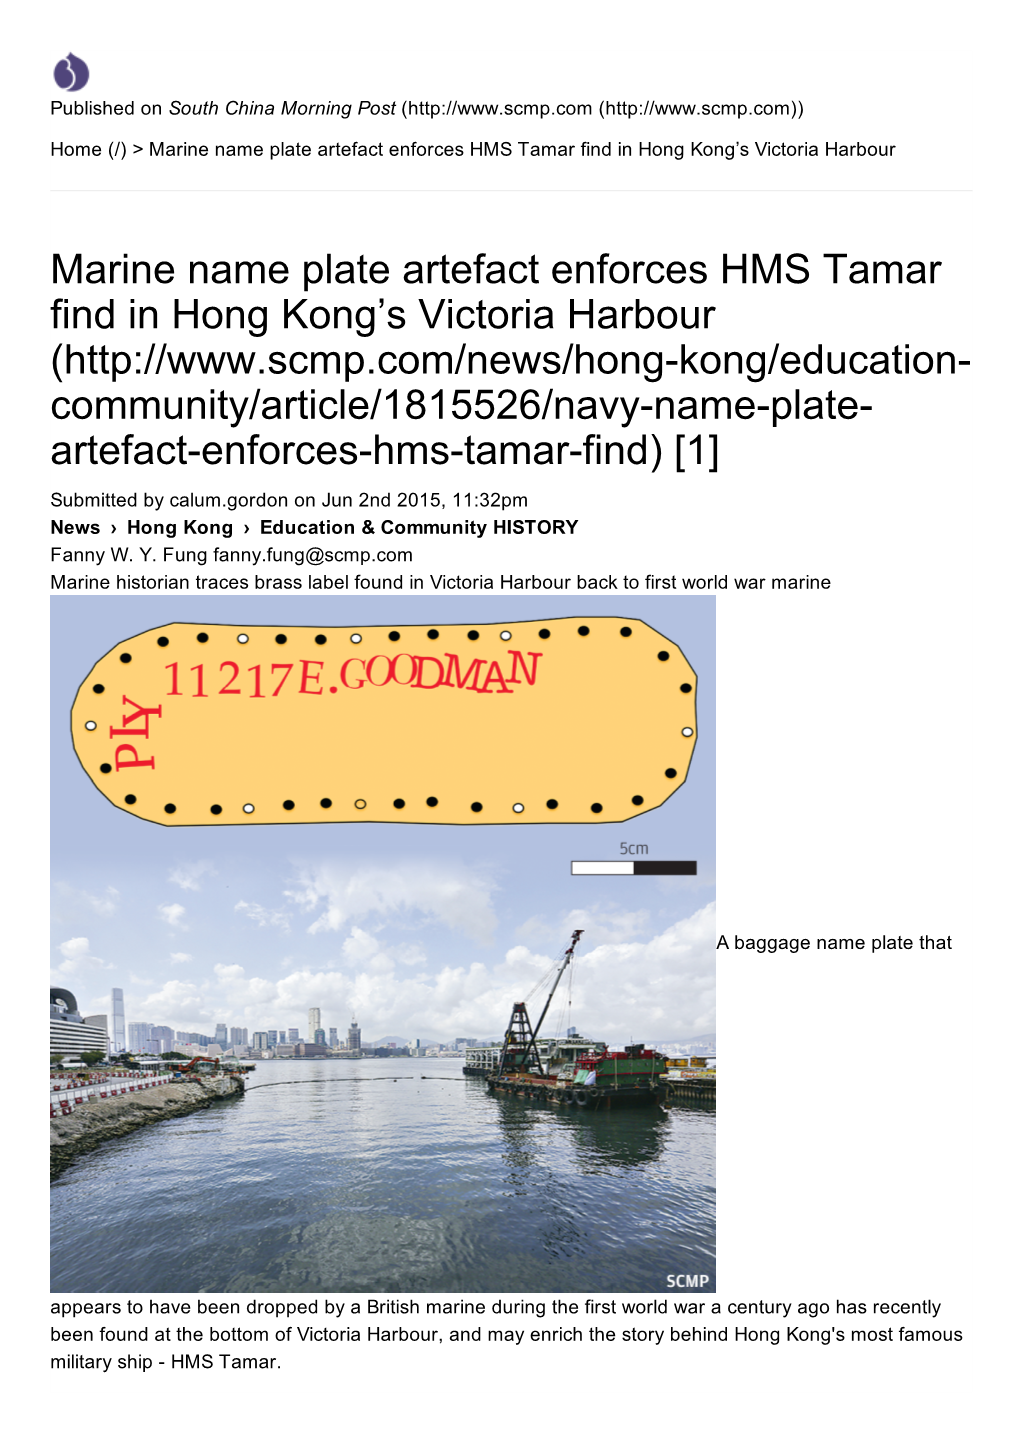 Marine Name Plate Artefact Enforces HMS Tamar Find in Hong Kong's